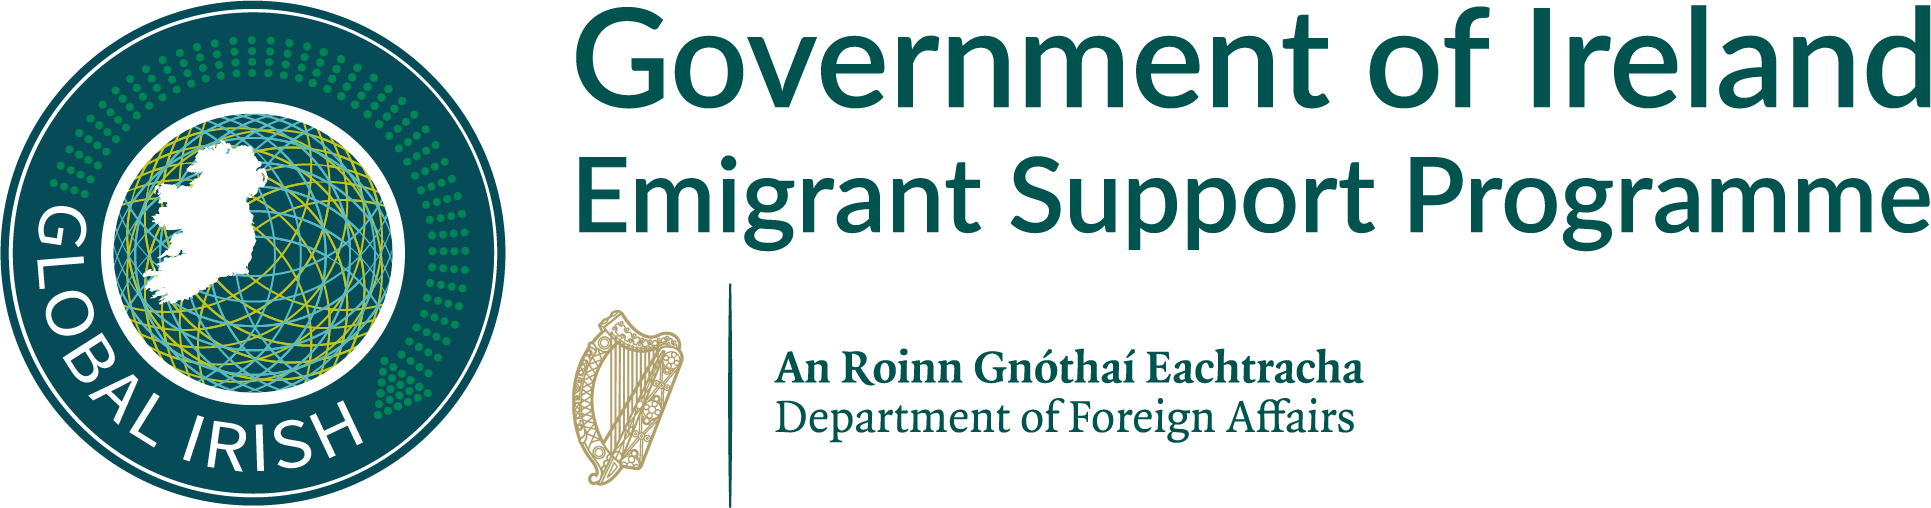 DFA Logo - Government of Ireland Emigrant Support Programme